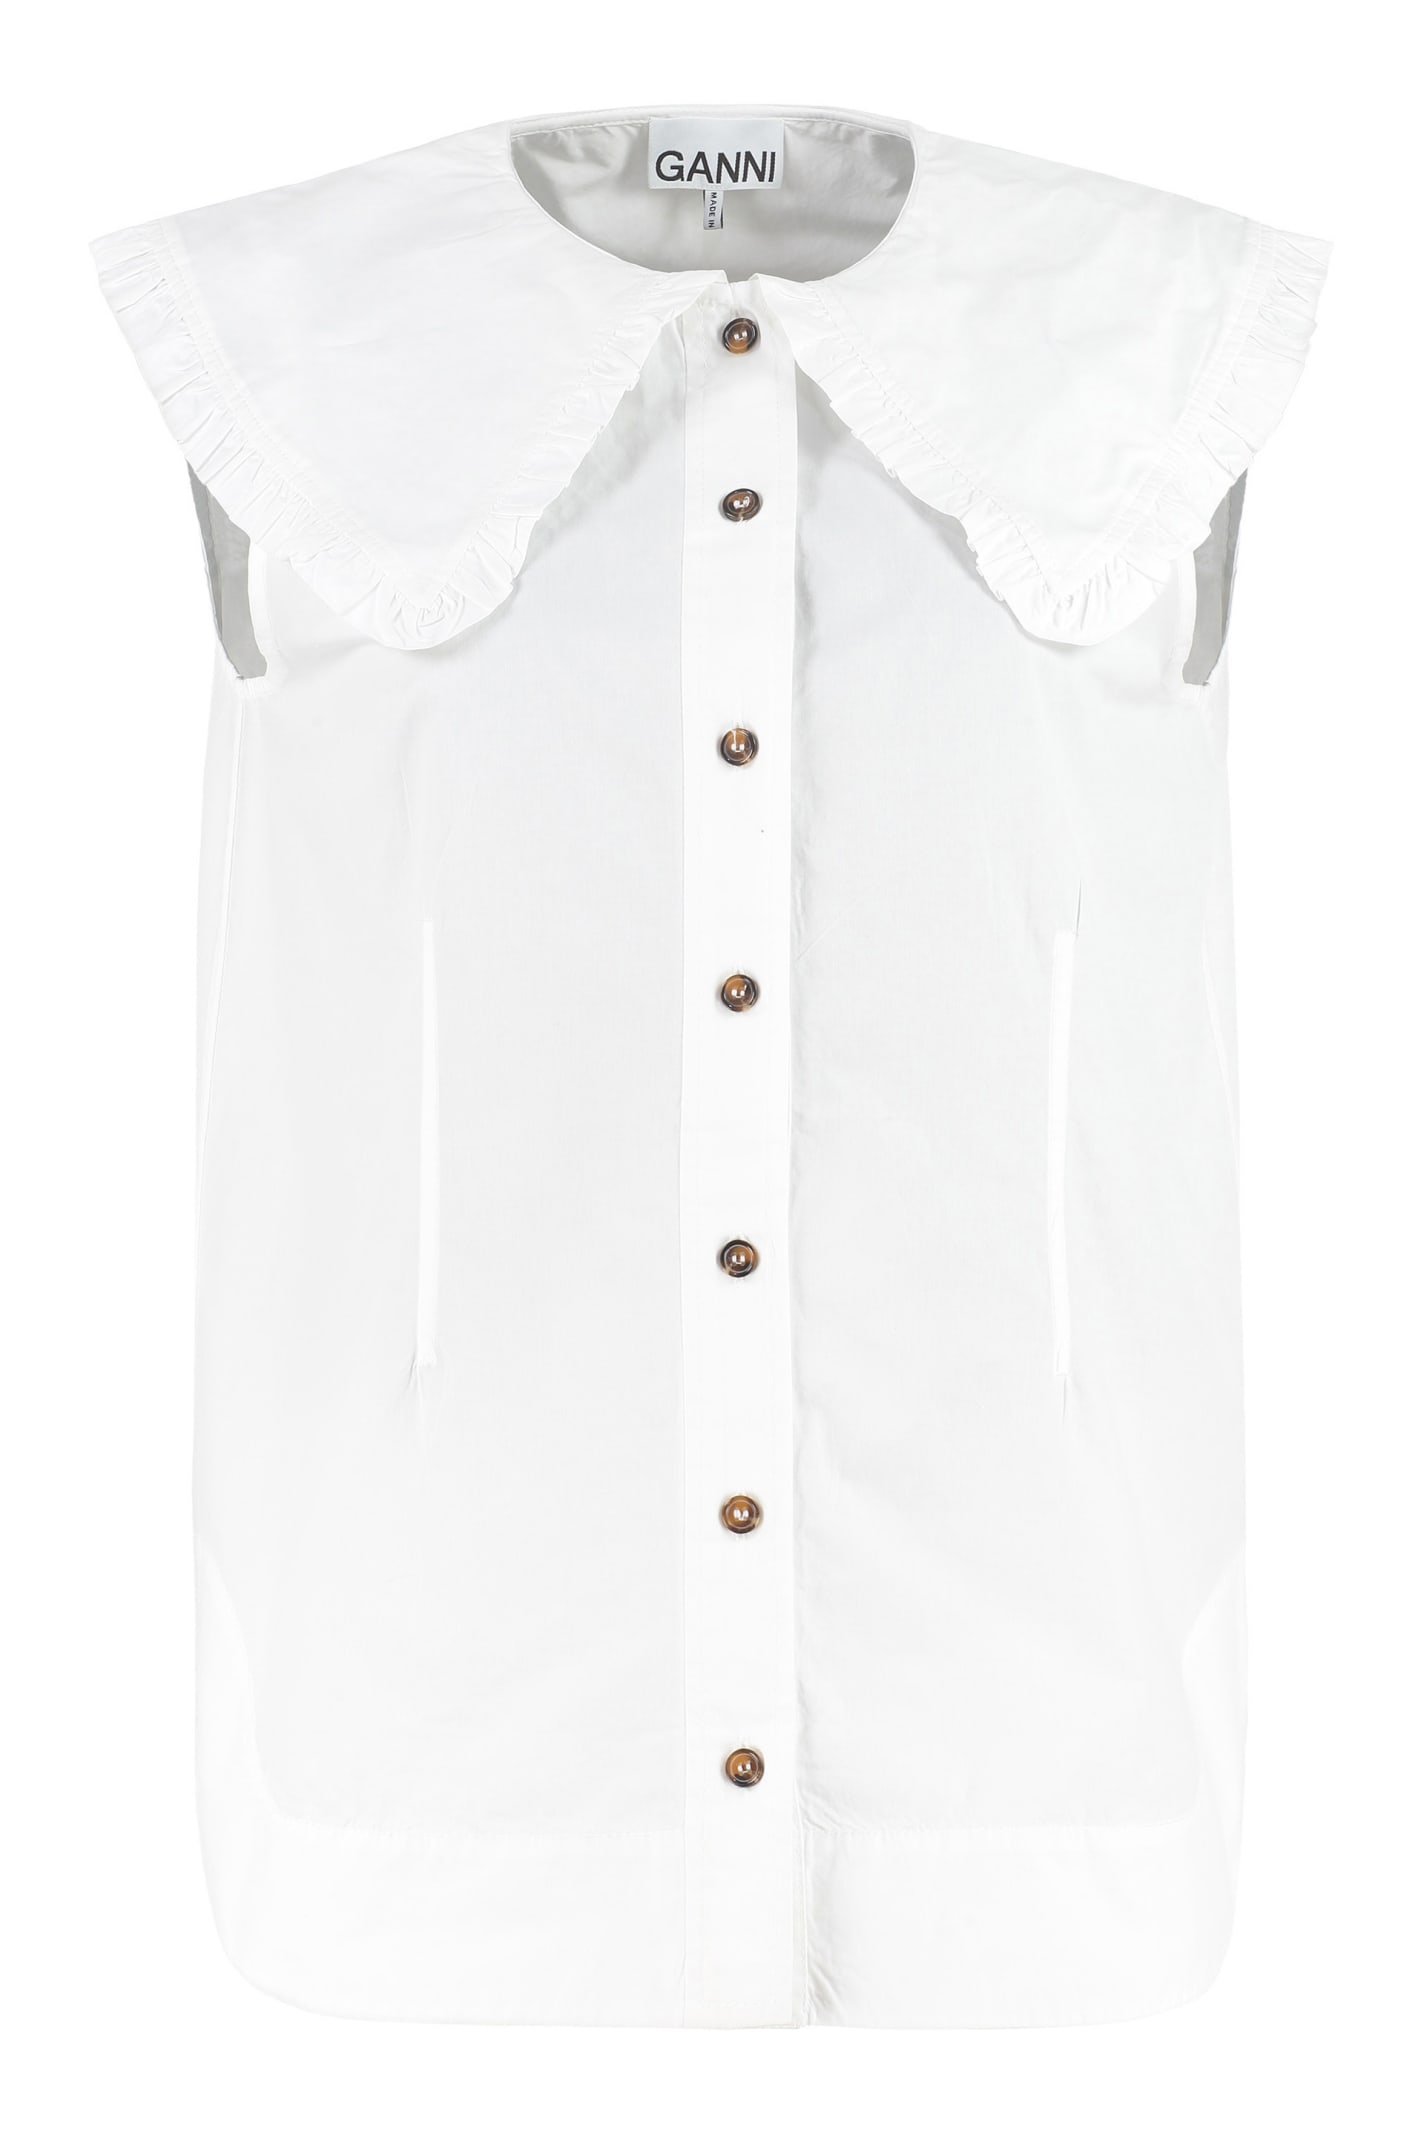 Ganni Maxi Collar Cotton Shirt